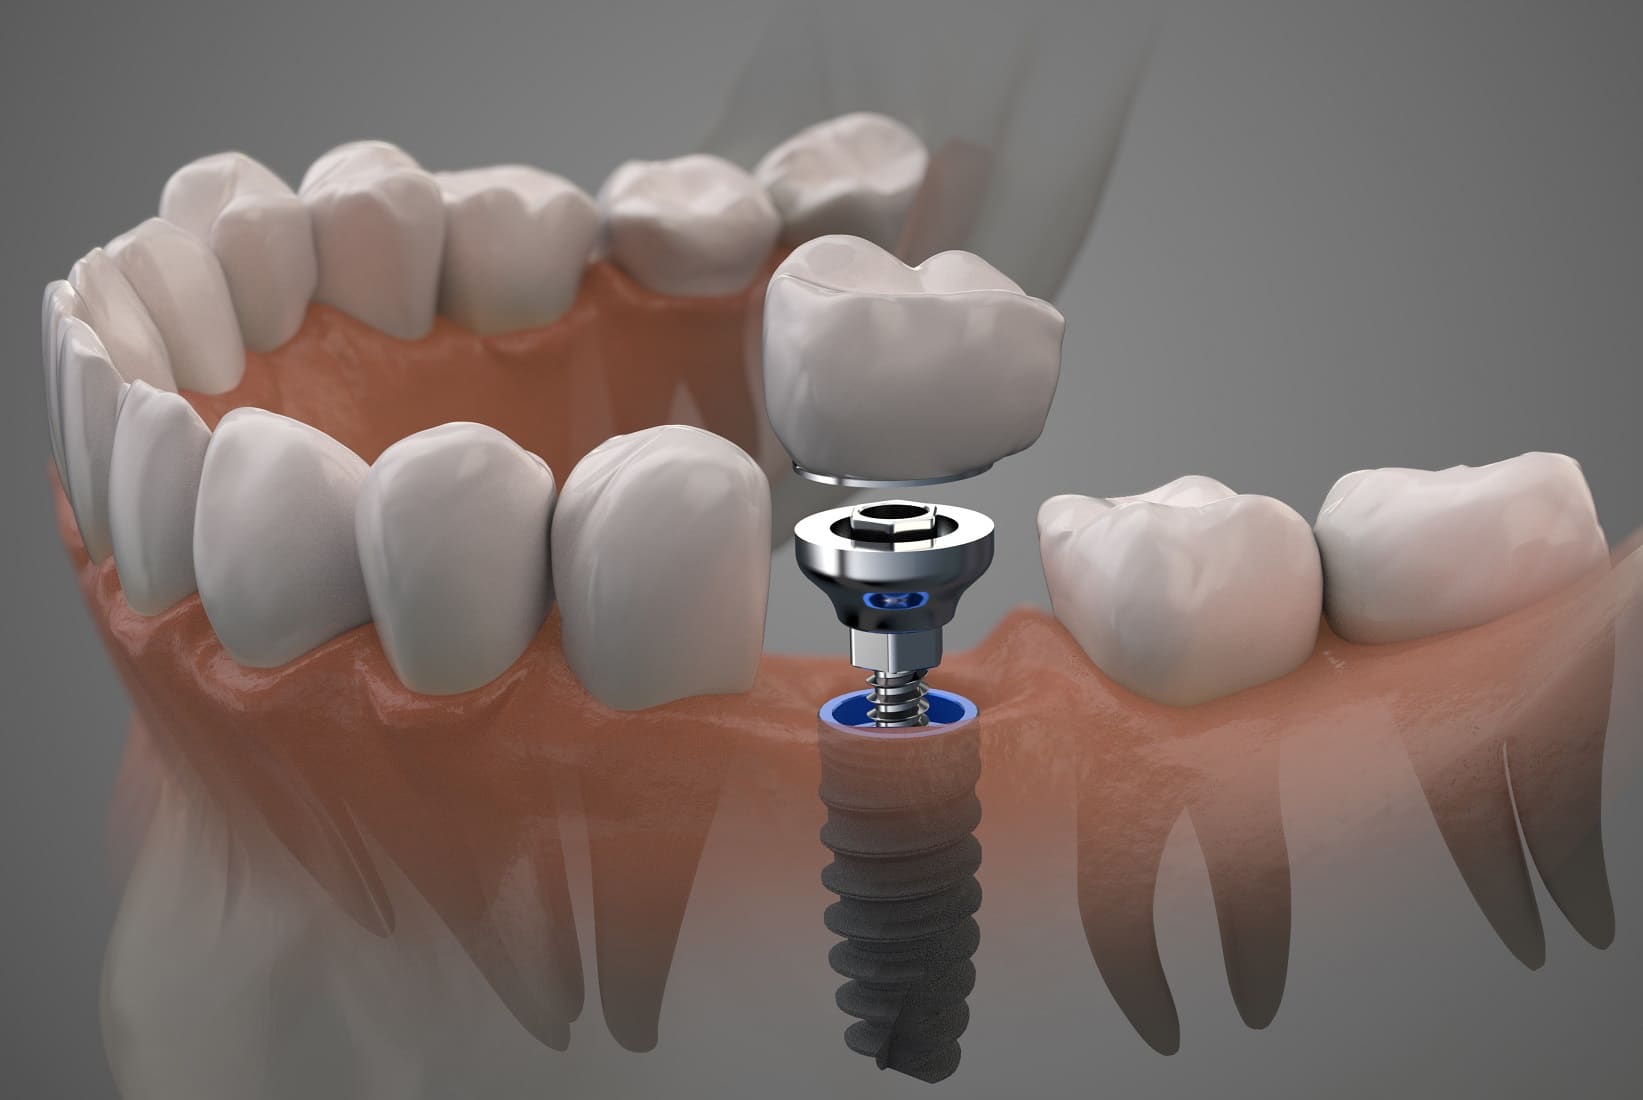 https://santarosadentalimplants.com/wp-content/uploads/2020/01/A-Brief-Look-at-the-Dental-Implant-Procedure.jpeg